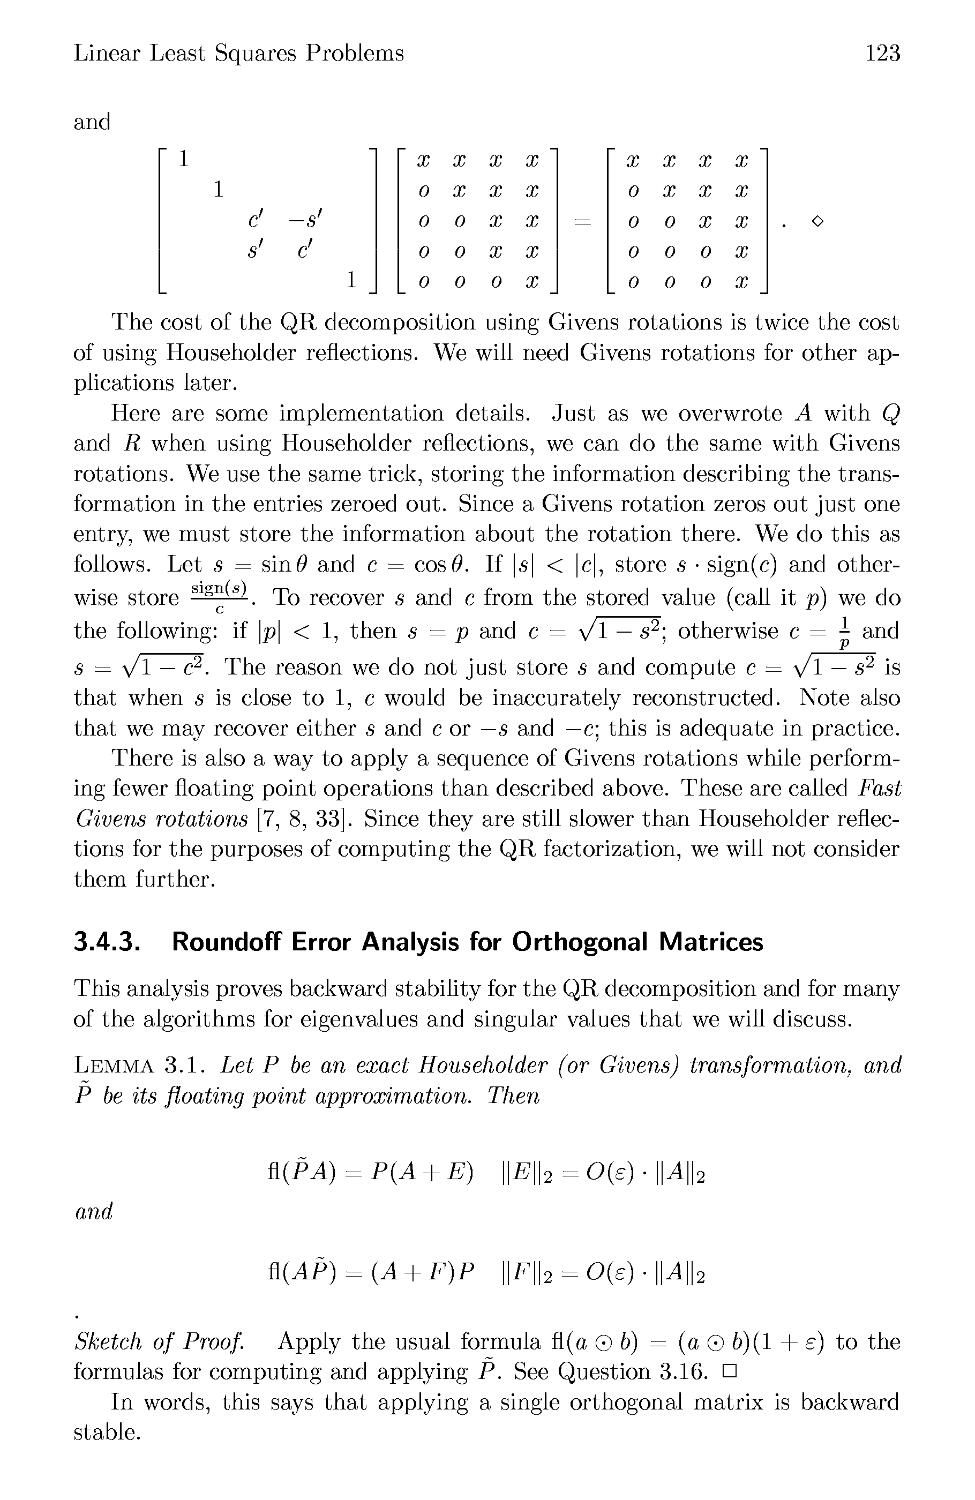 3.4.3 Roundoff Error Analysis for Orthogonal Matrices